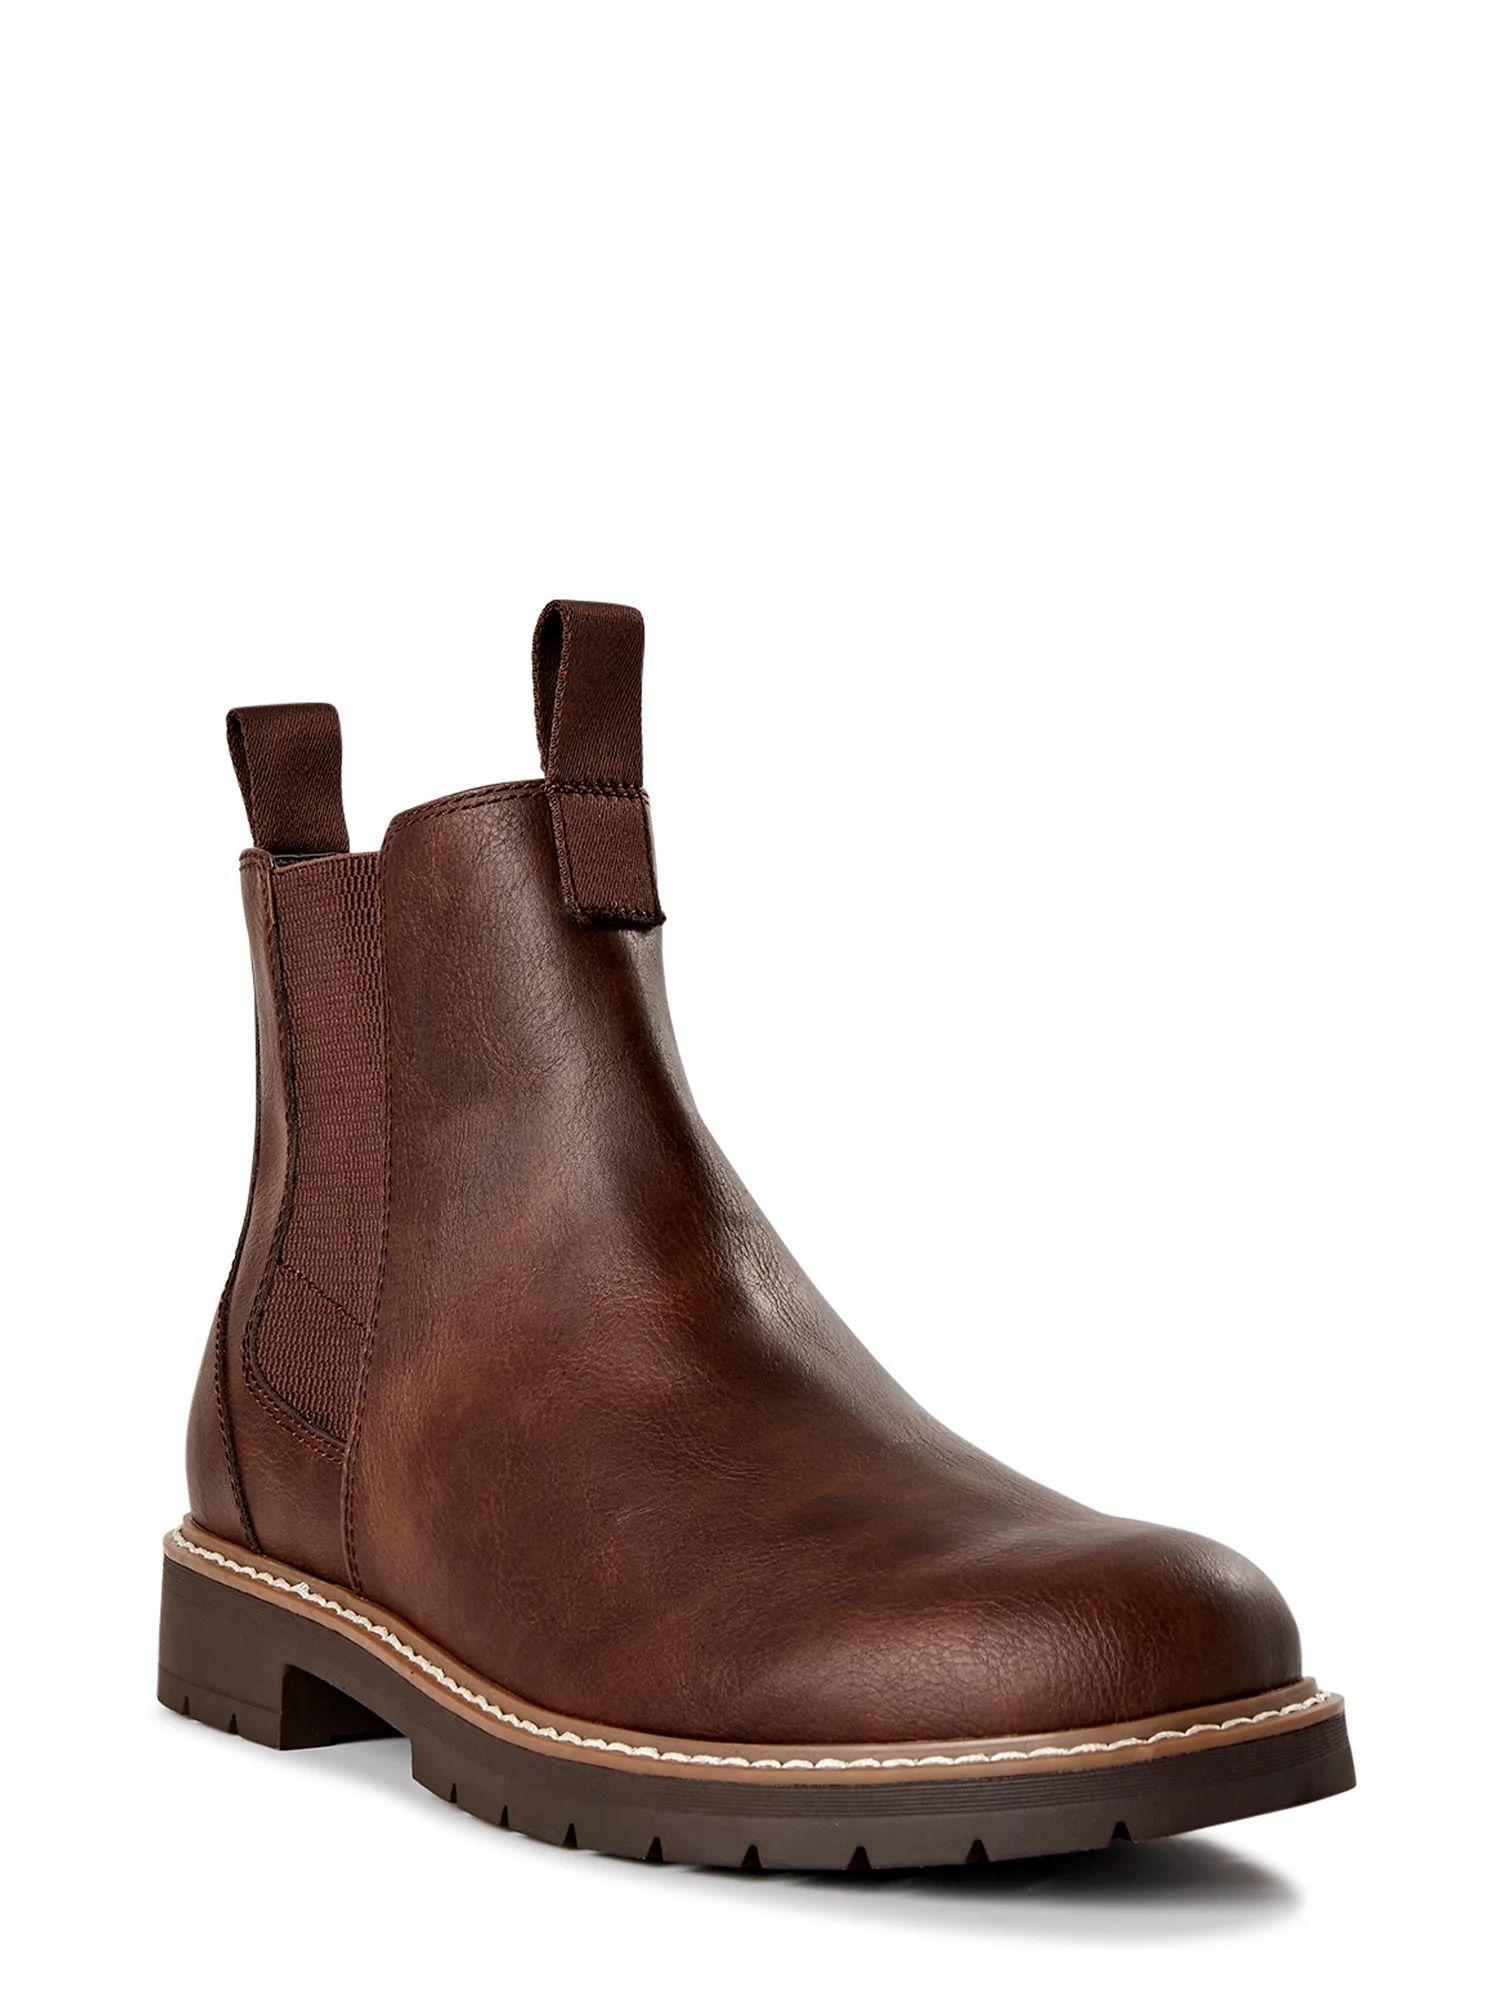 PORTLAND by Portland Boot Company Men's Casual Chelsea Boots | Walmart (US)